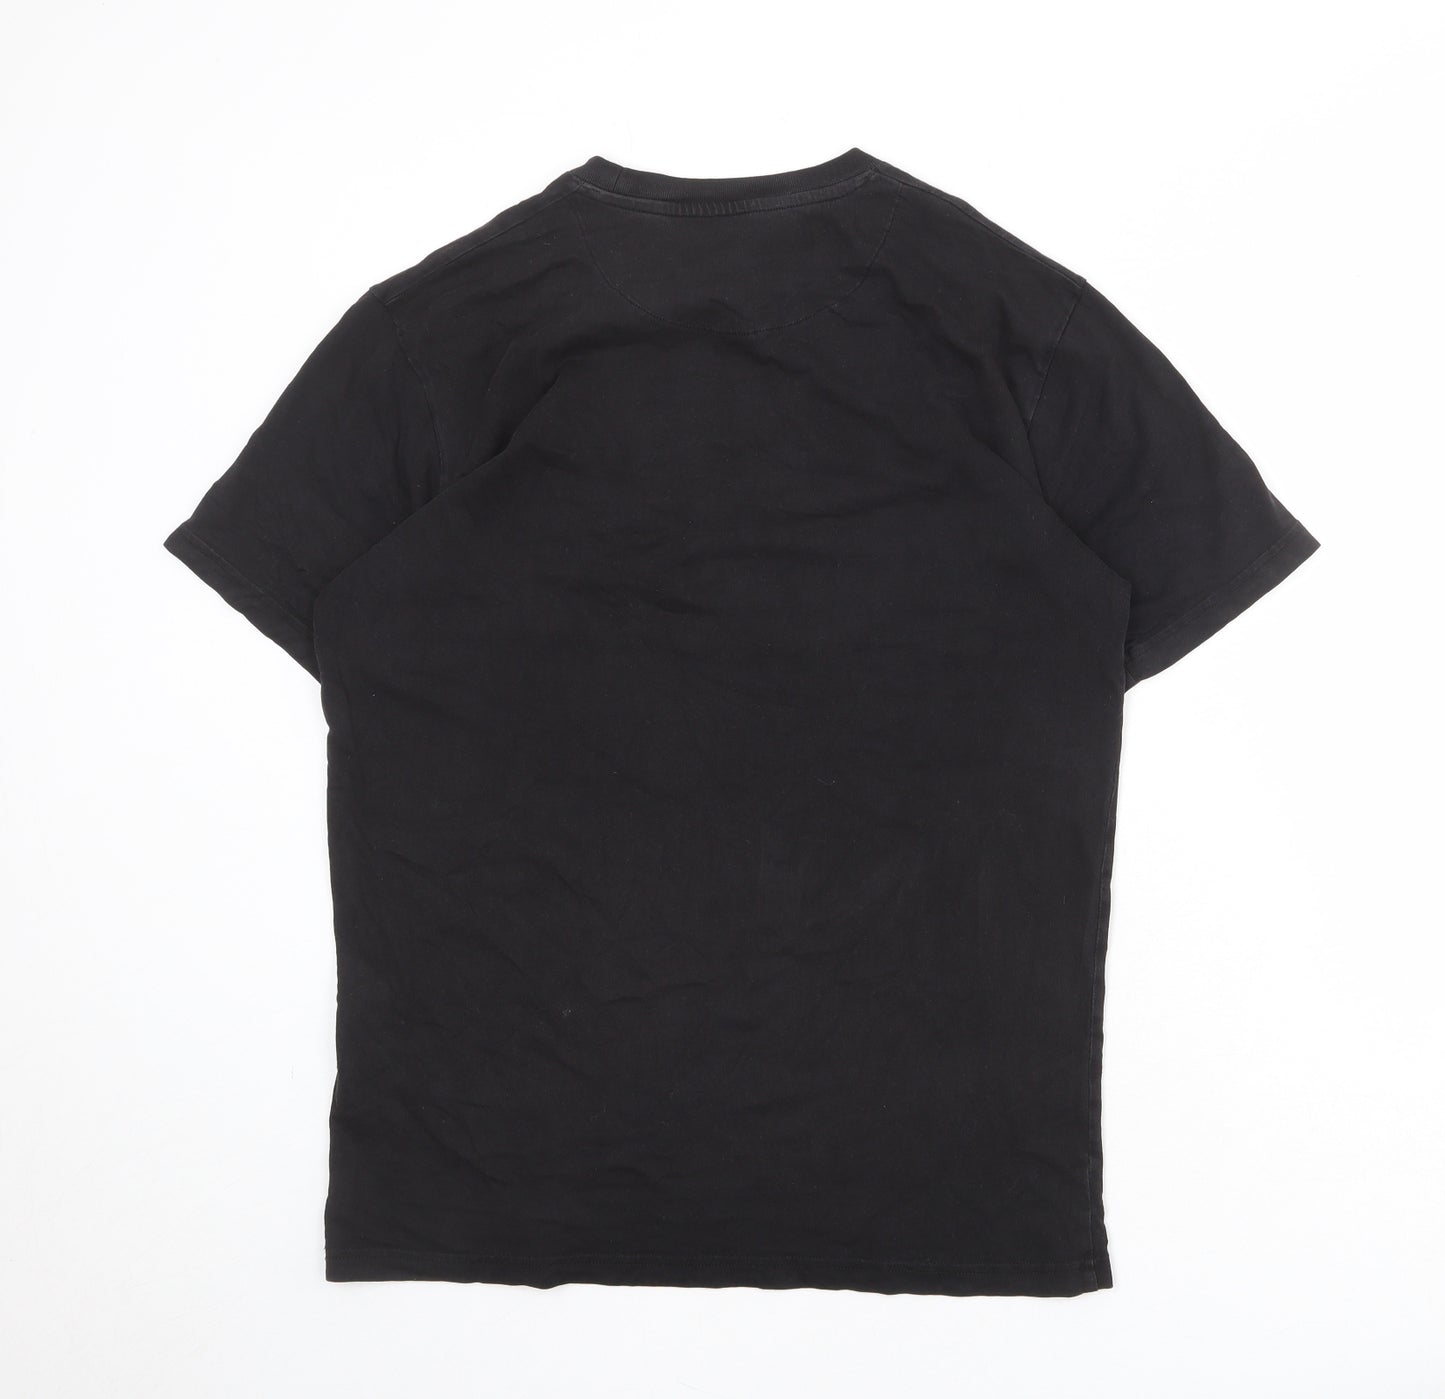 Jameson Carter Mens Black Cotton T-Shirt Size S Round Neck